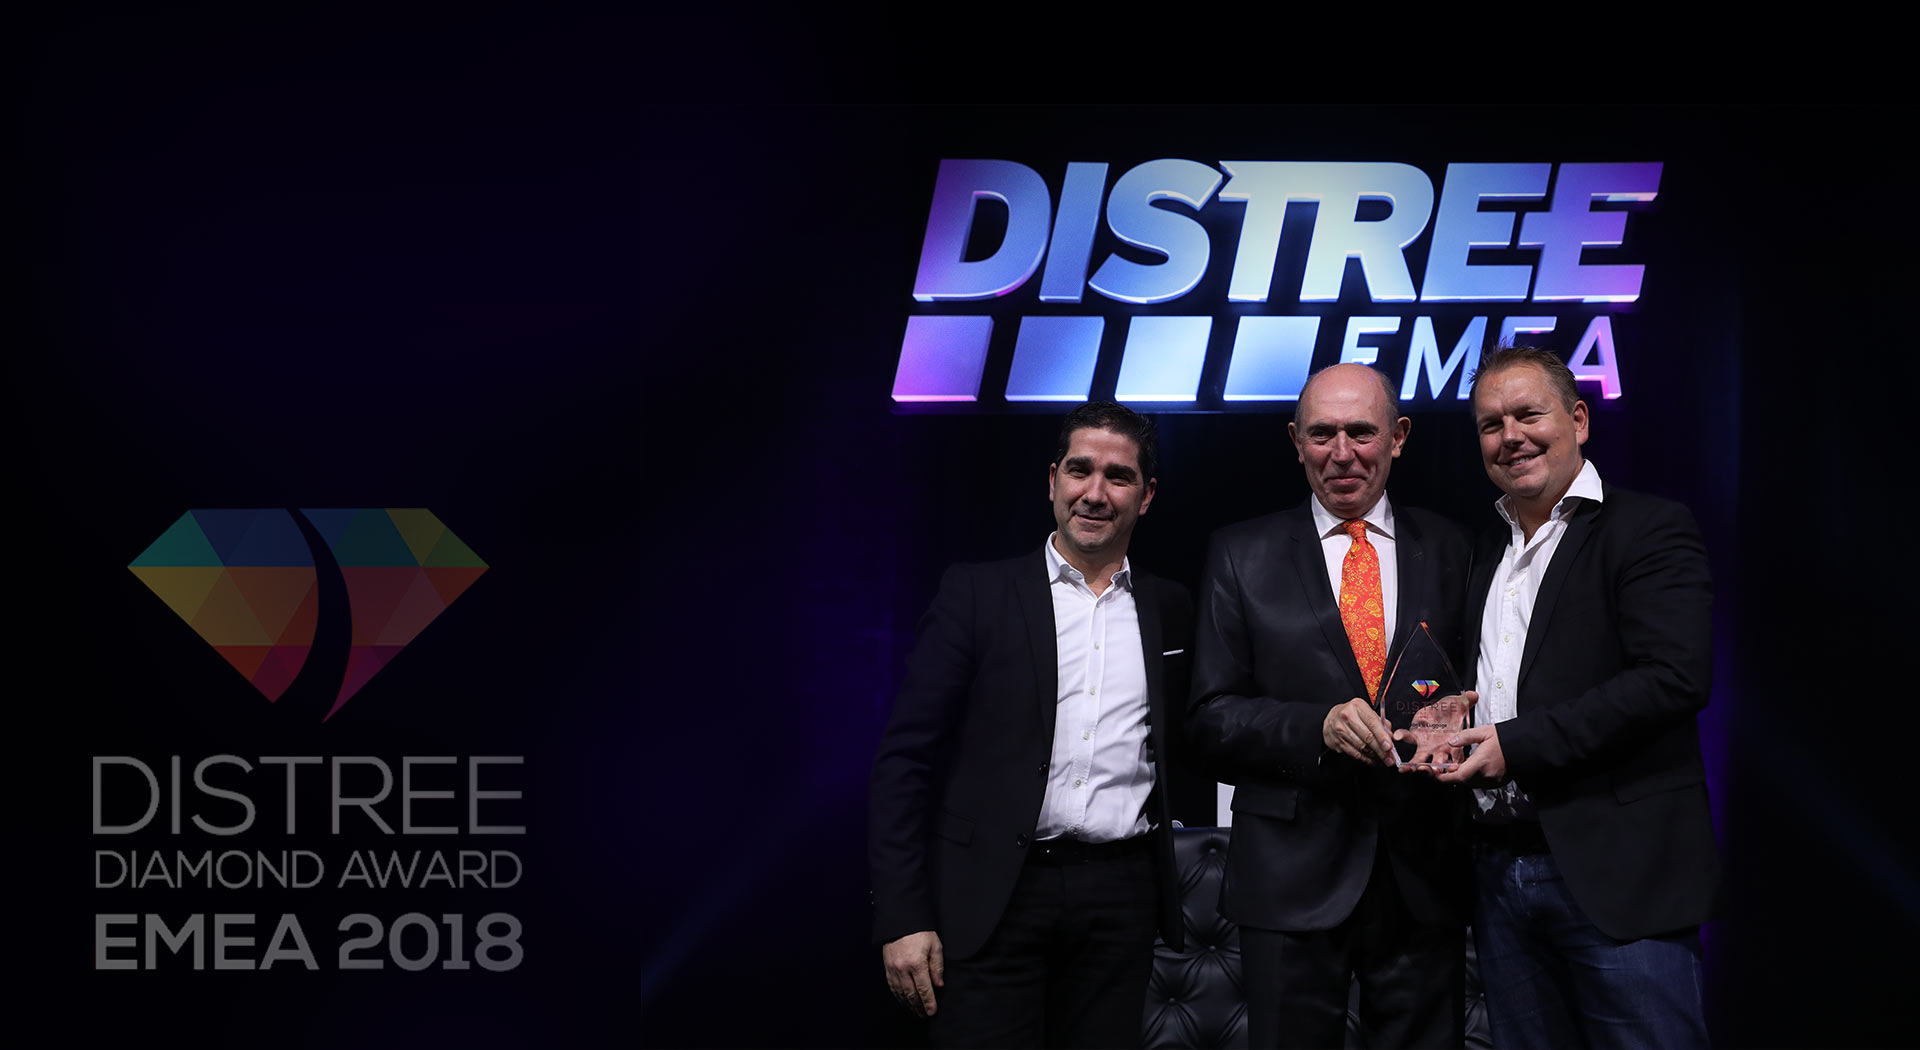 Dicota gewinnt erneut Distree Diamond Award